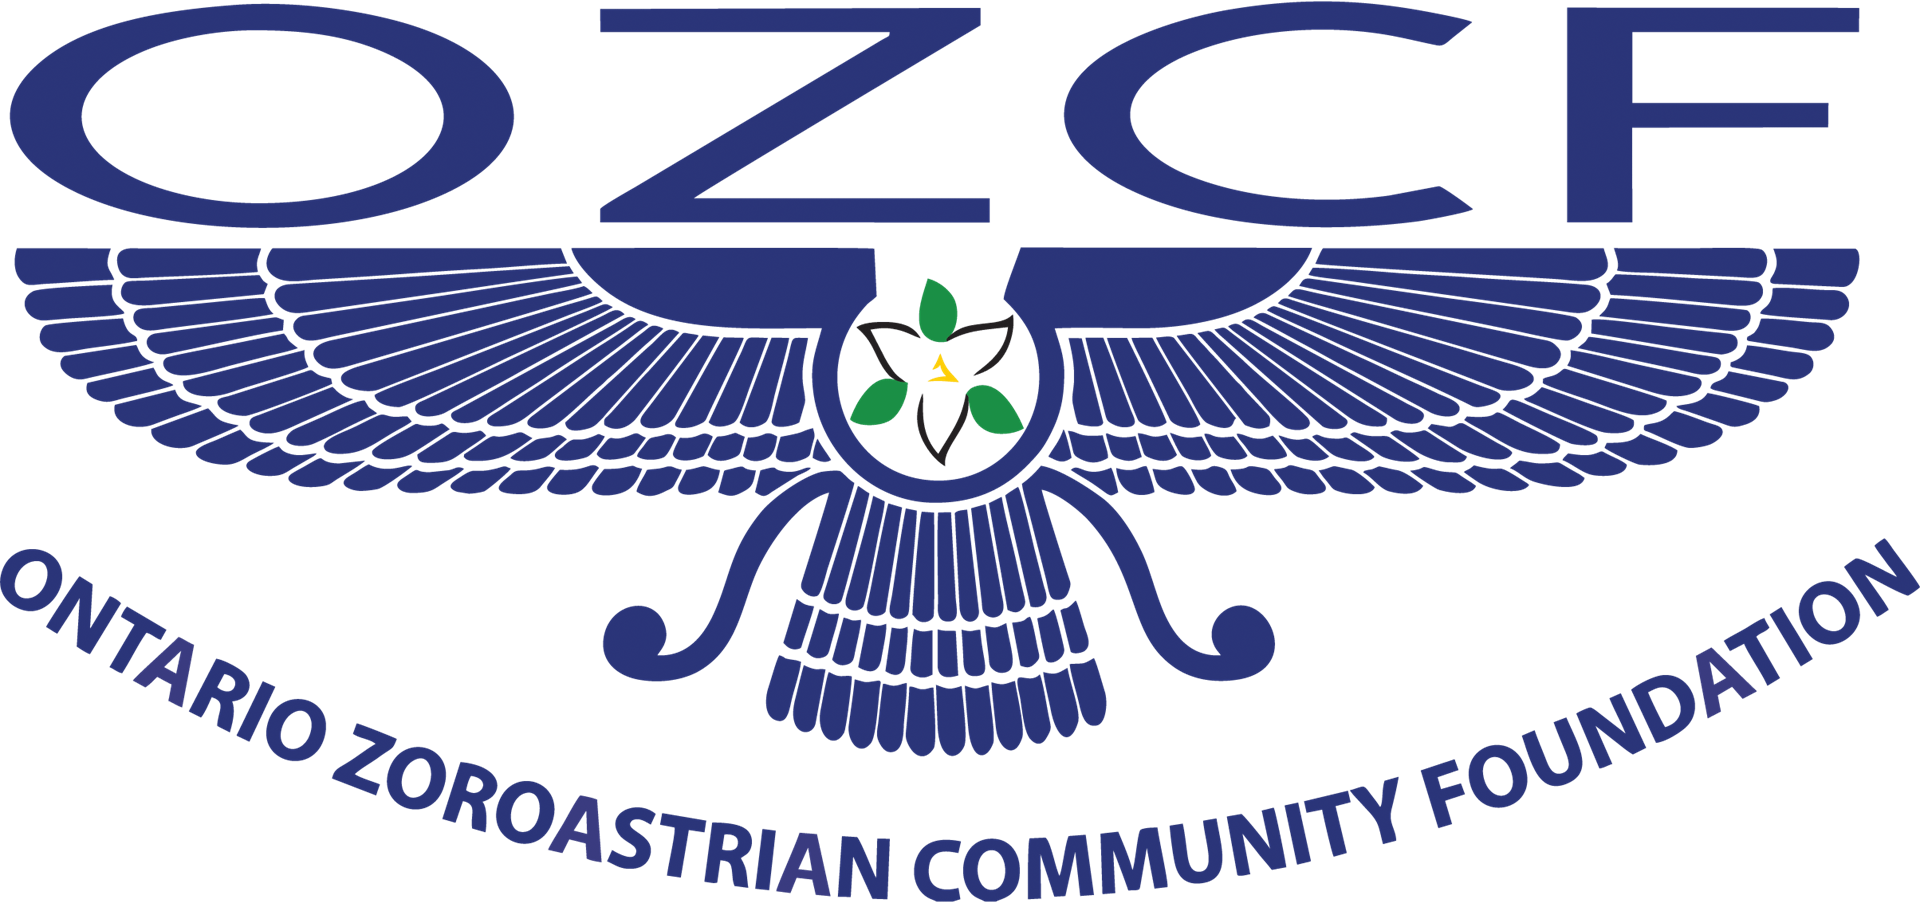 Zoroastrian Logo - Ontario Zoroastrian Community Foundation - Home